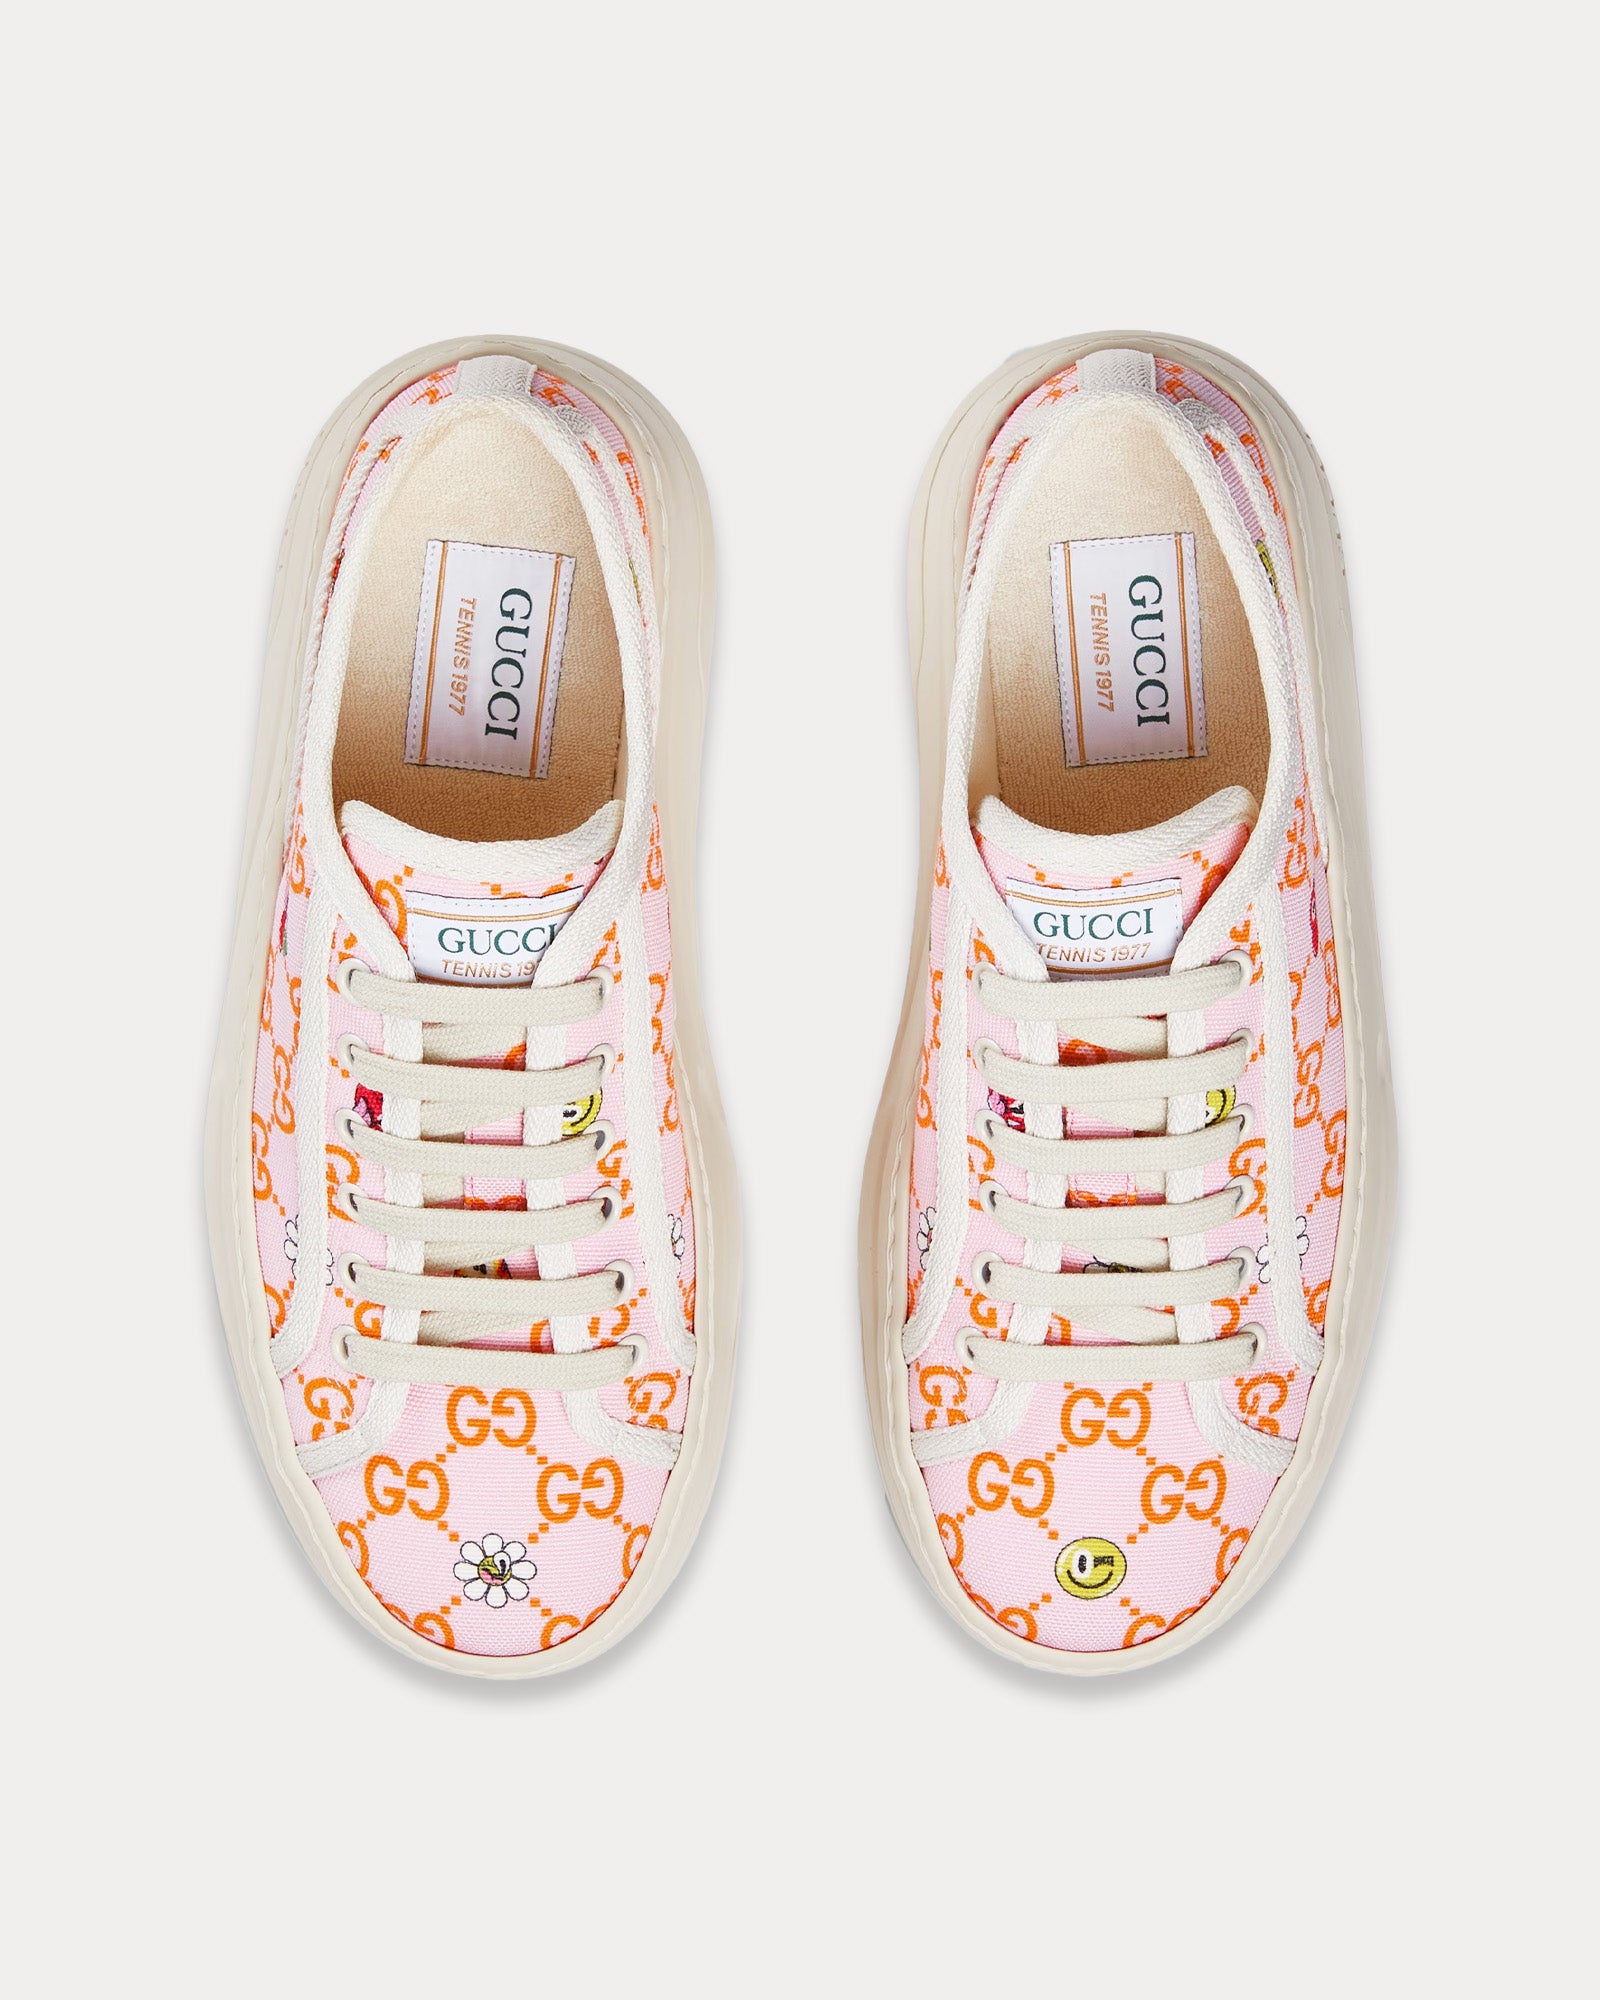 Gucci x Hattie Stewart - GG Canvas Pink / Ivory Low Top Sneakers